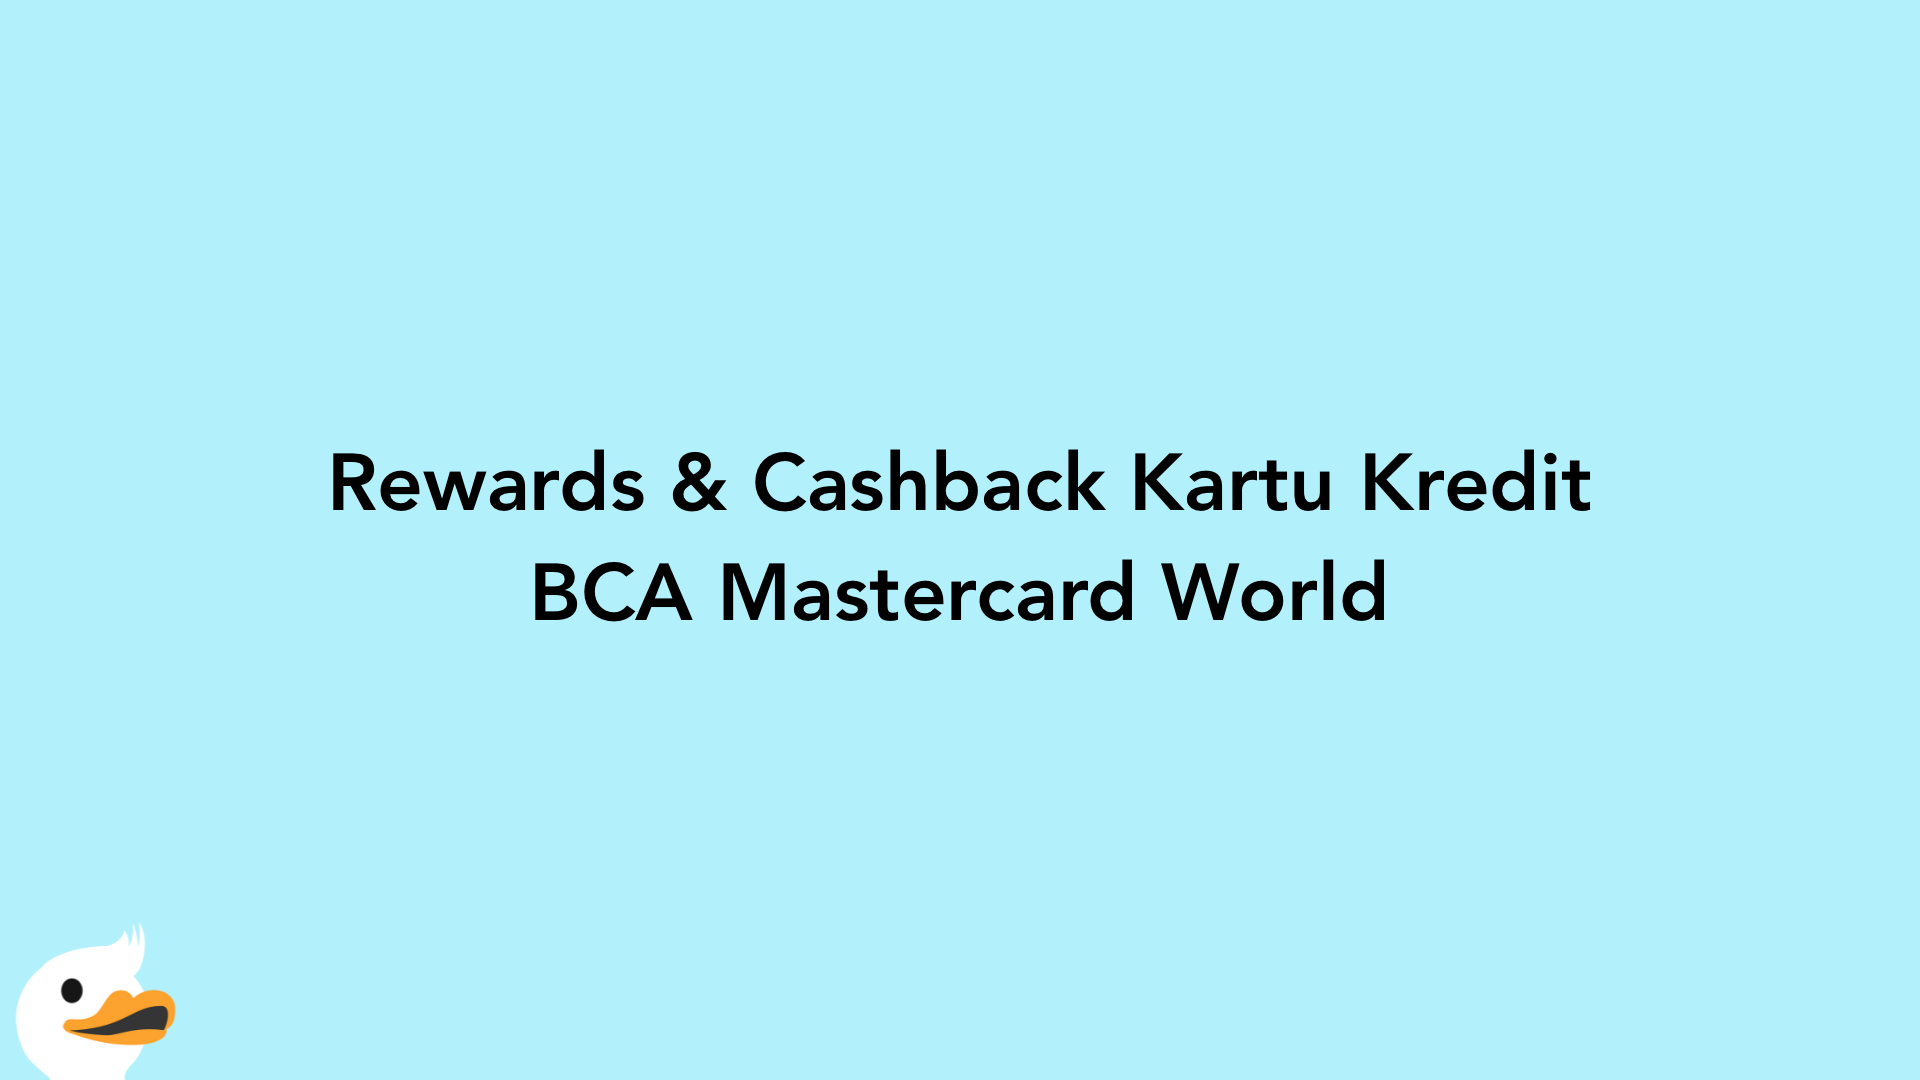 Rewards & Cashback Kartu Kredit BCA Mastercard World